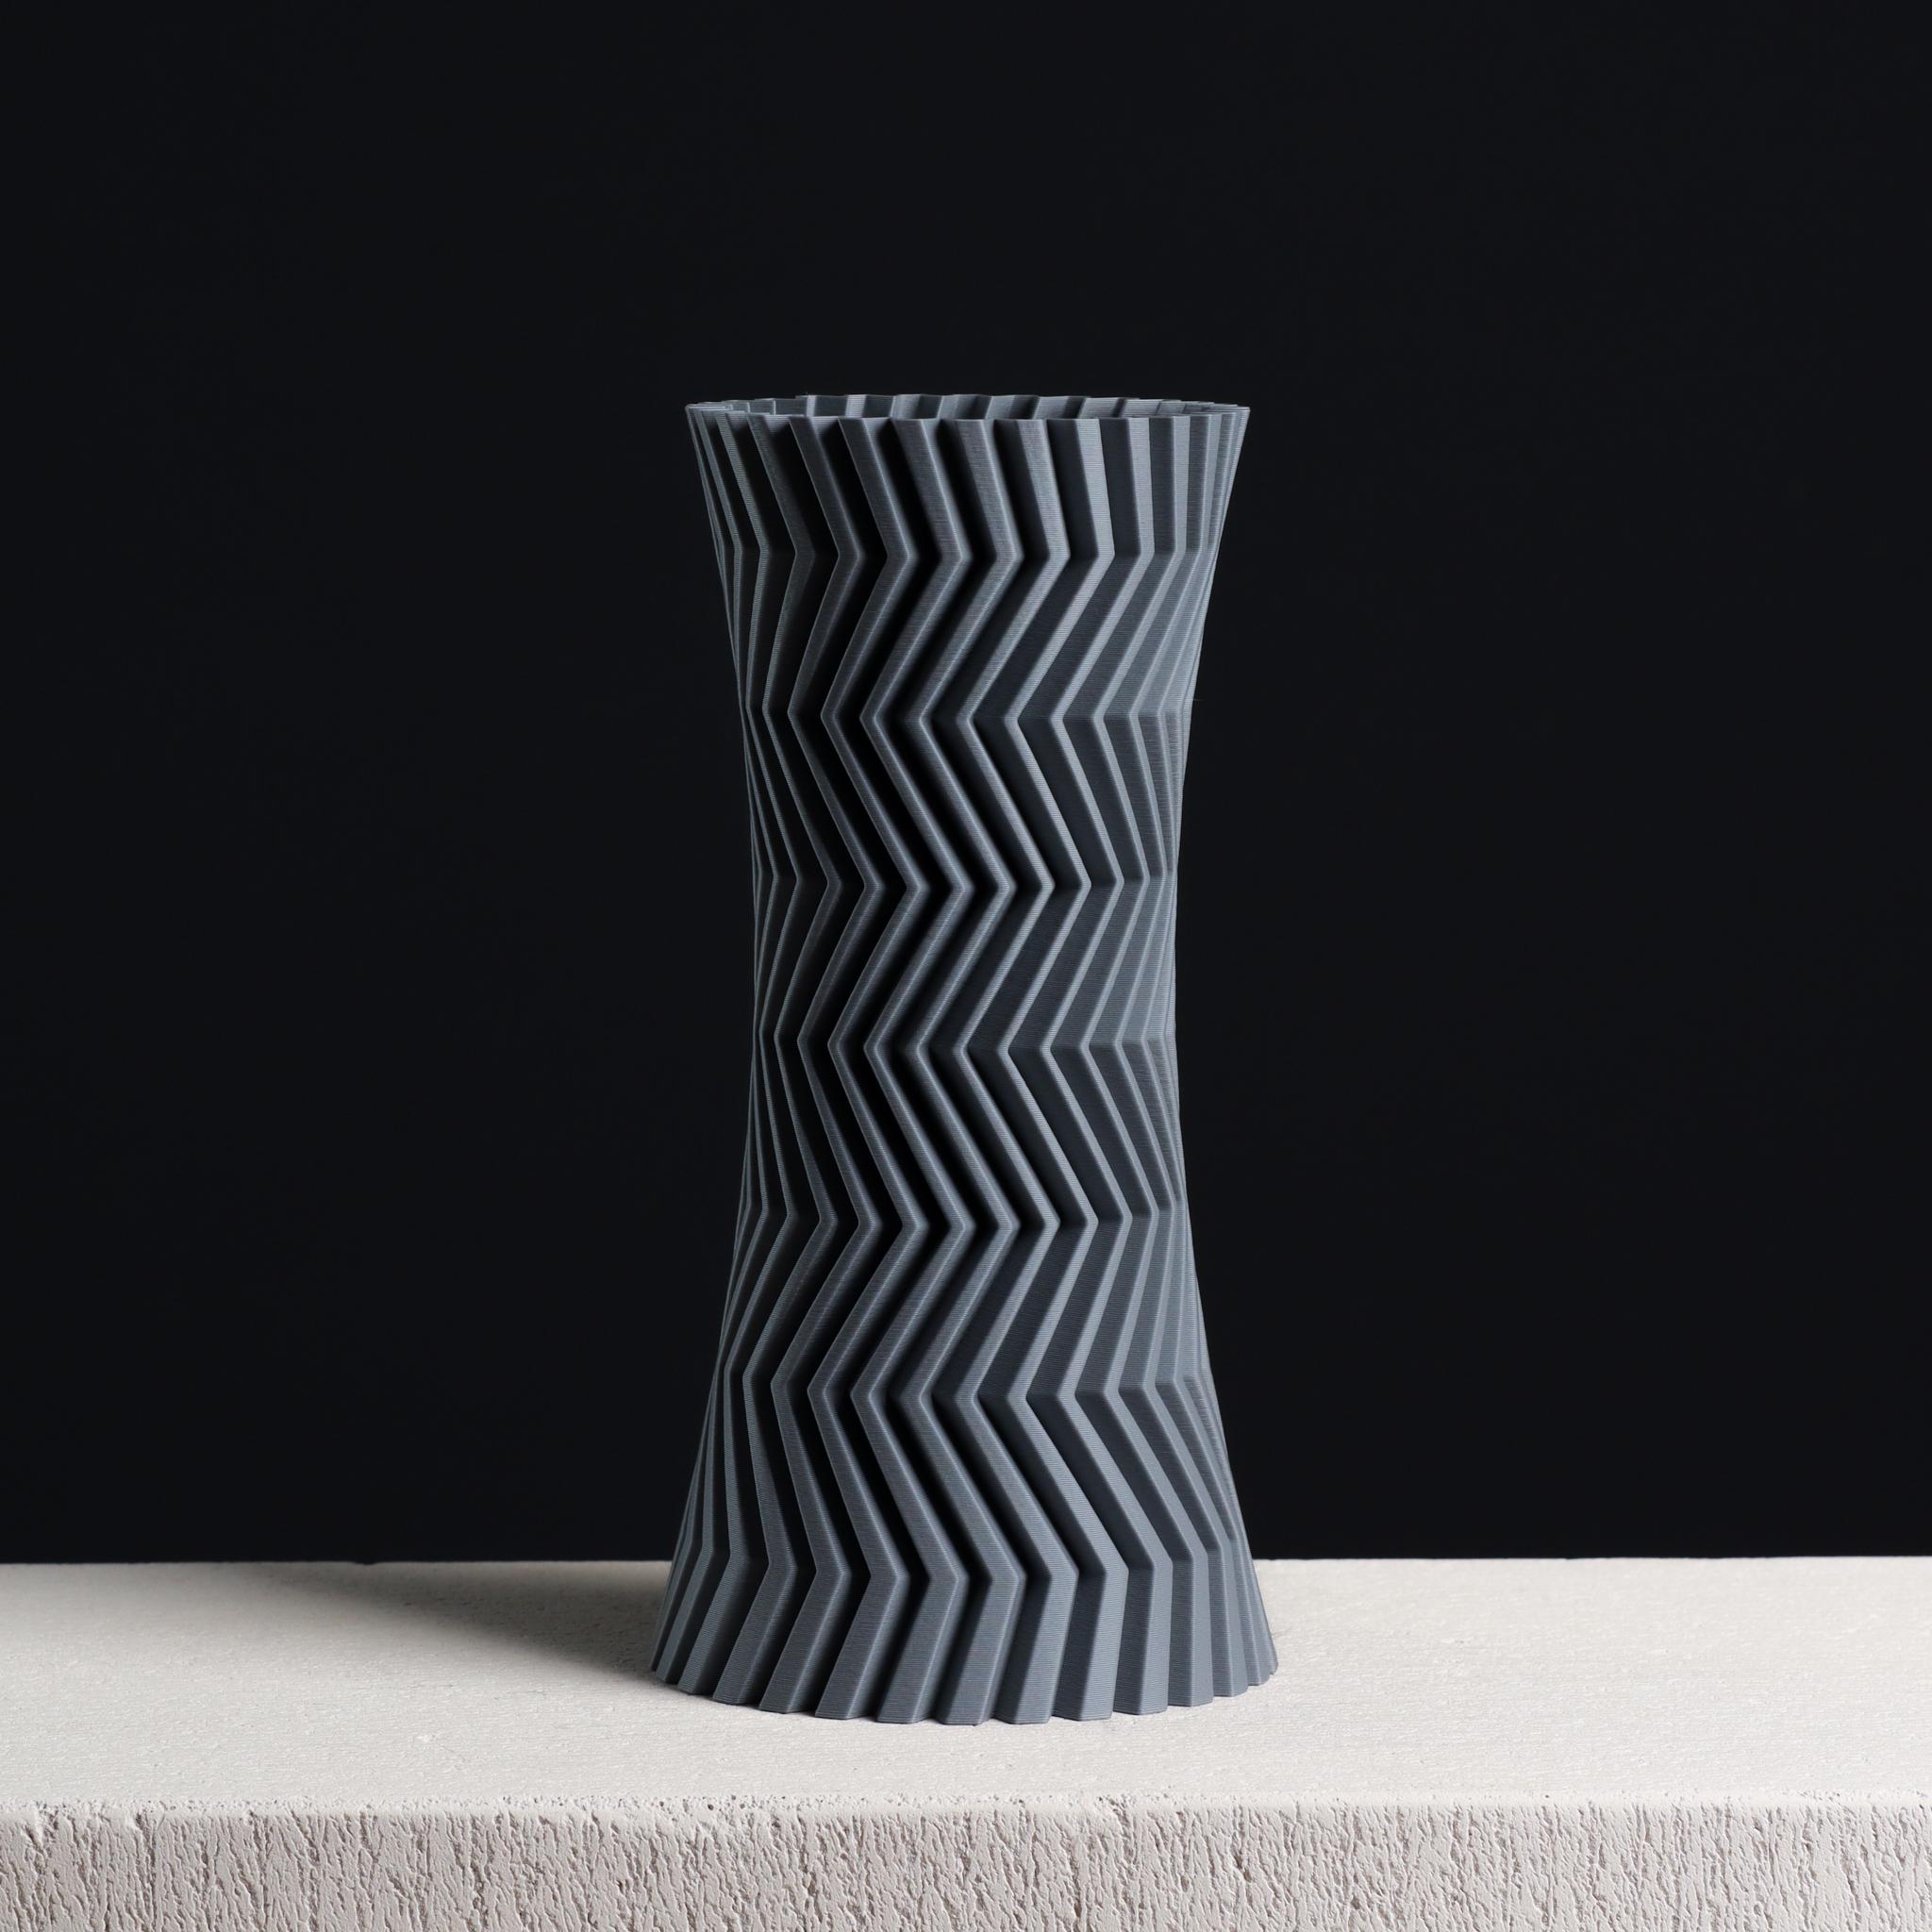 Zigzag Decoration Vase (vase mode) 3d model